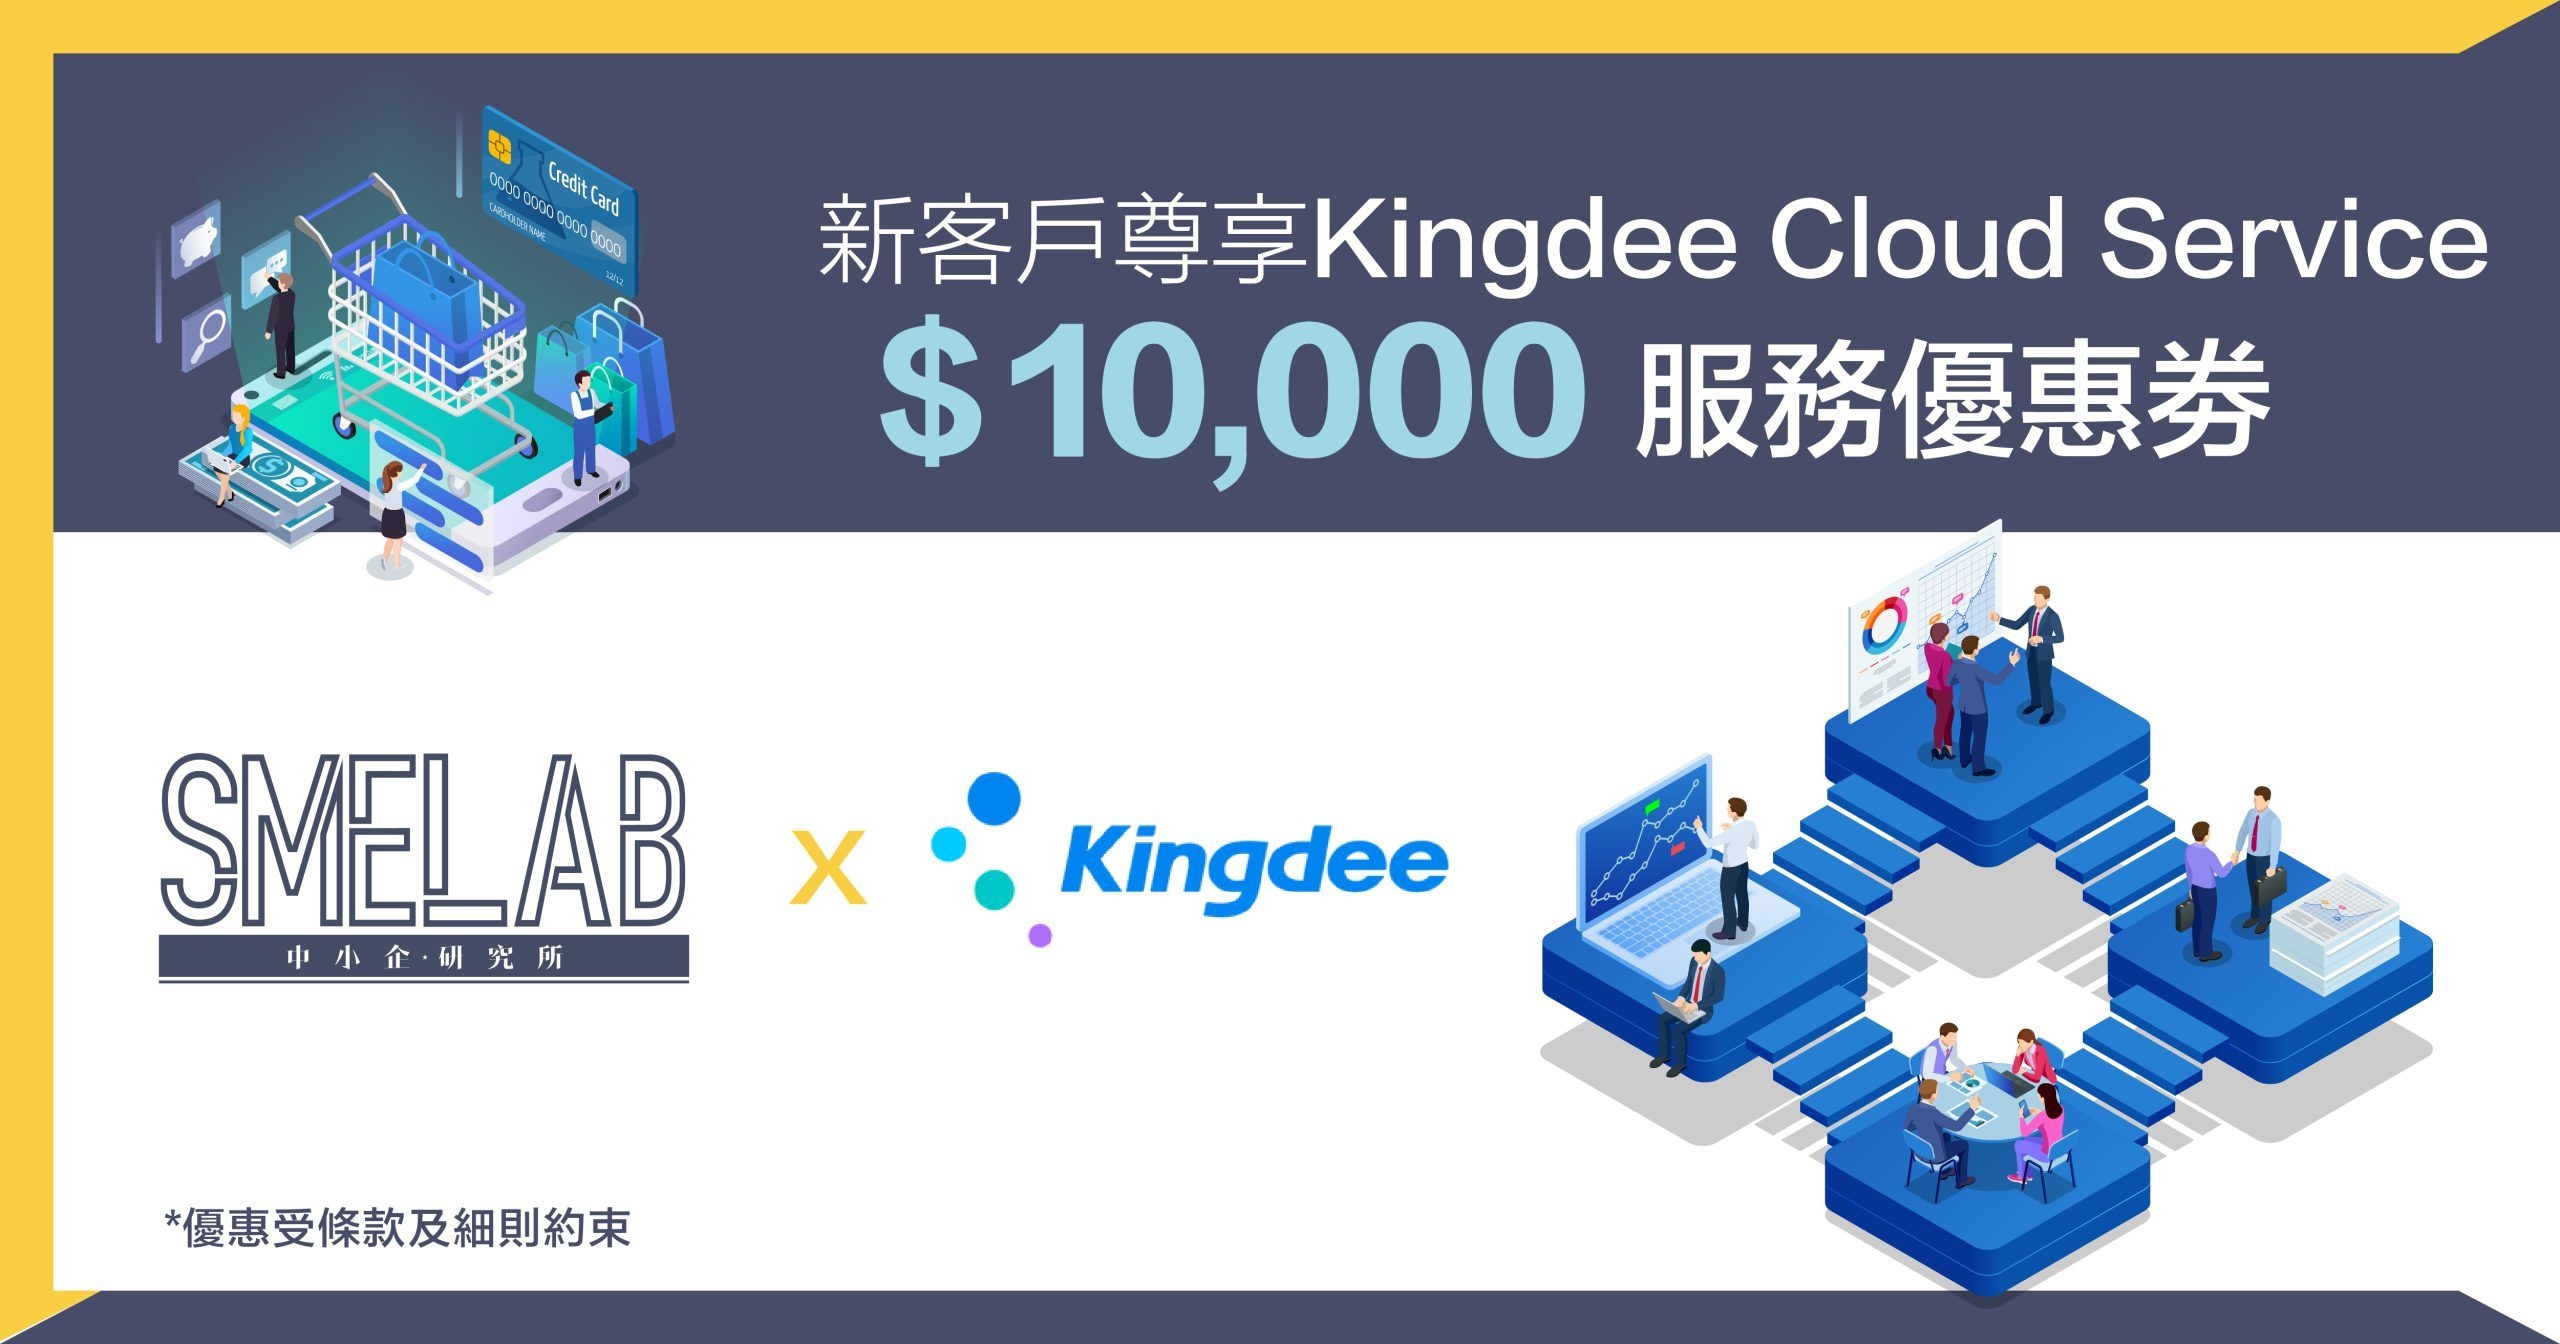 Kingdee：新客戶尊享Kingdee Cloud Service $10,000服務優惠券